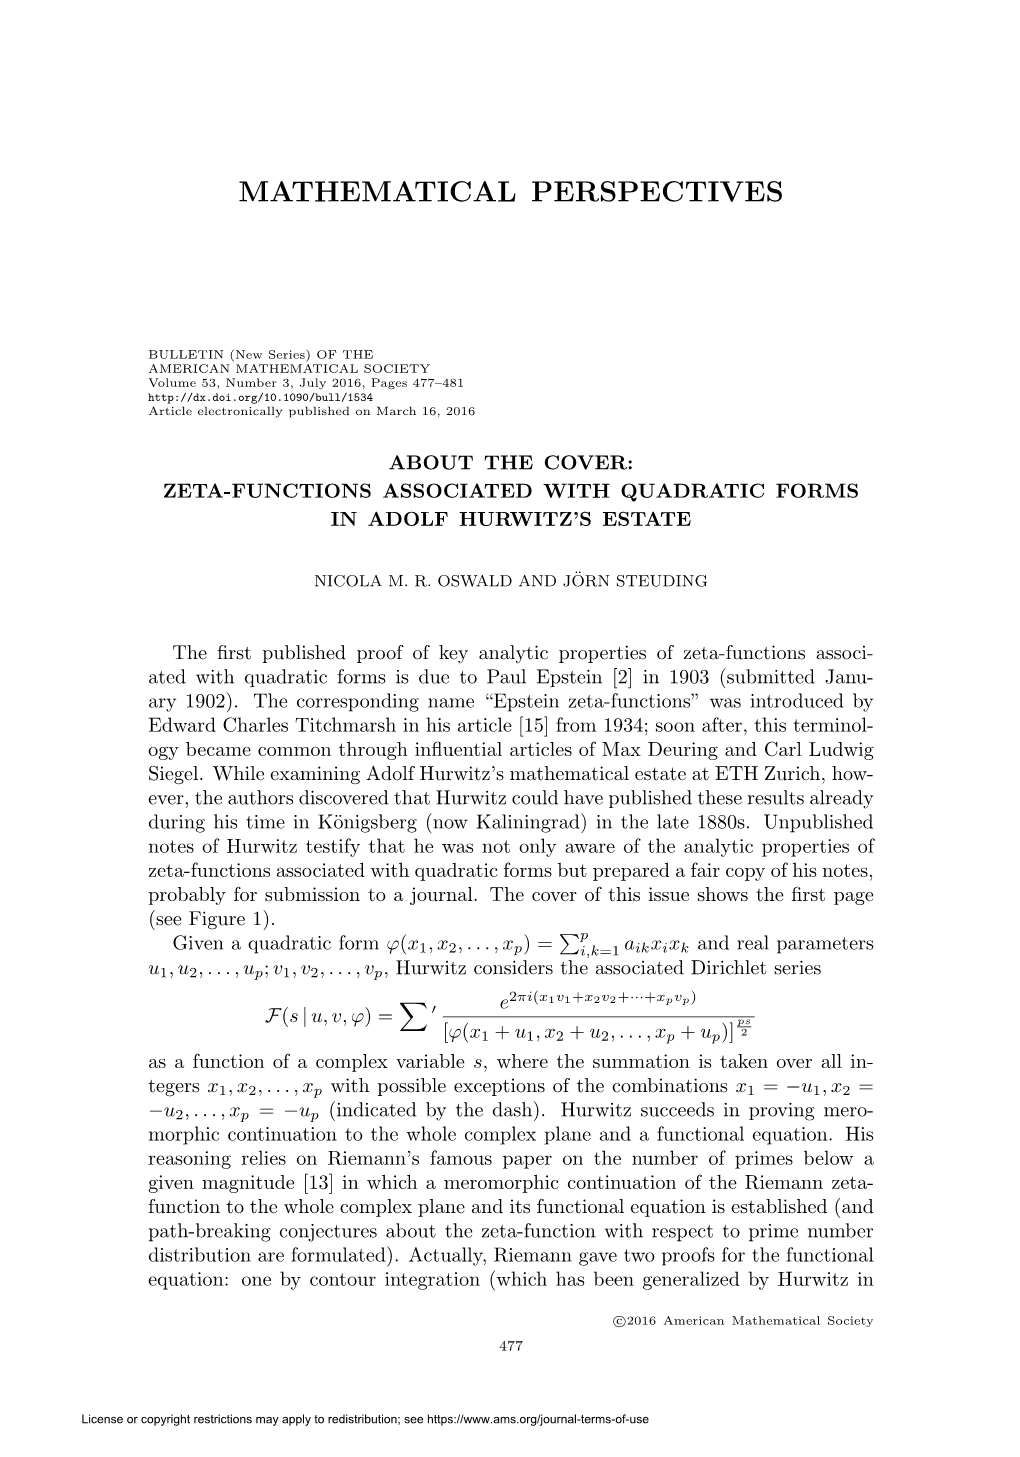 Zeta-Functions Associated with Quadratic Forms in Adolf Hurwitz's Estate